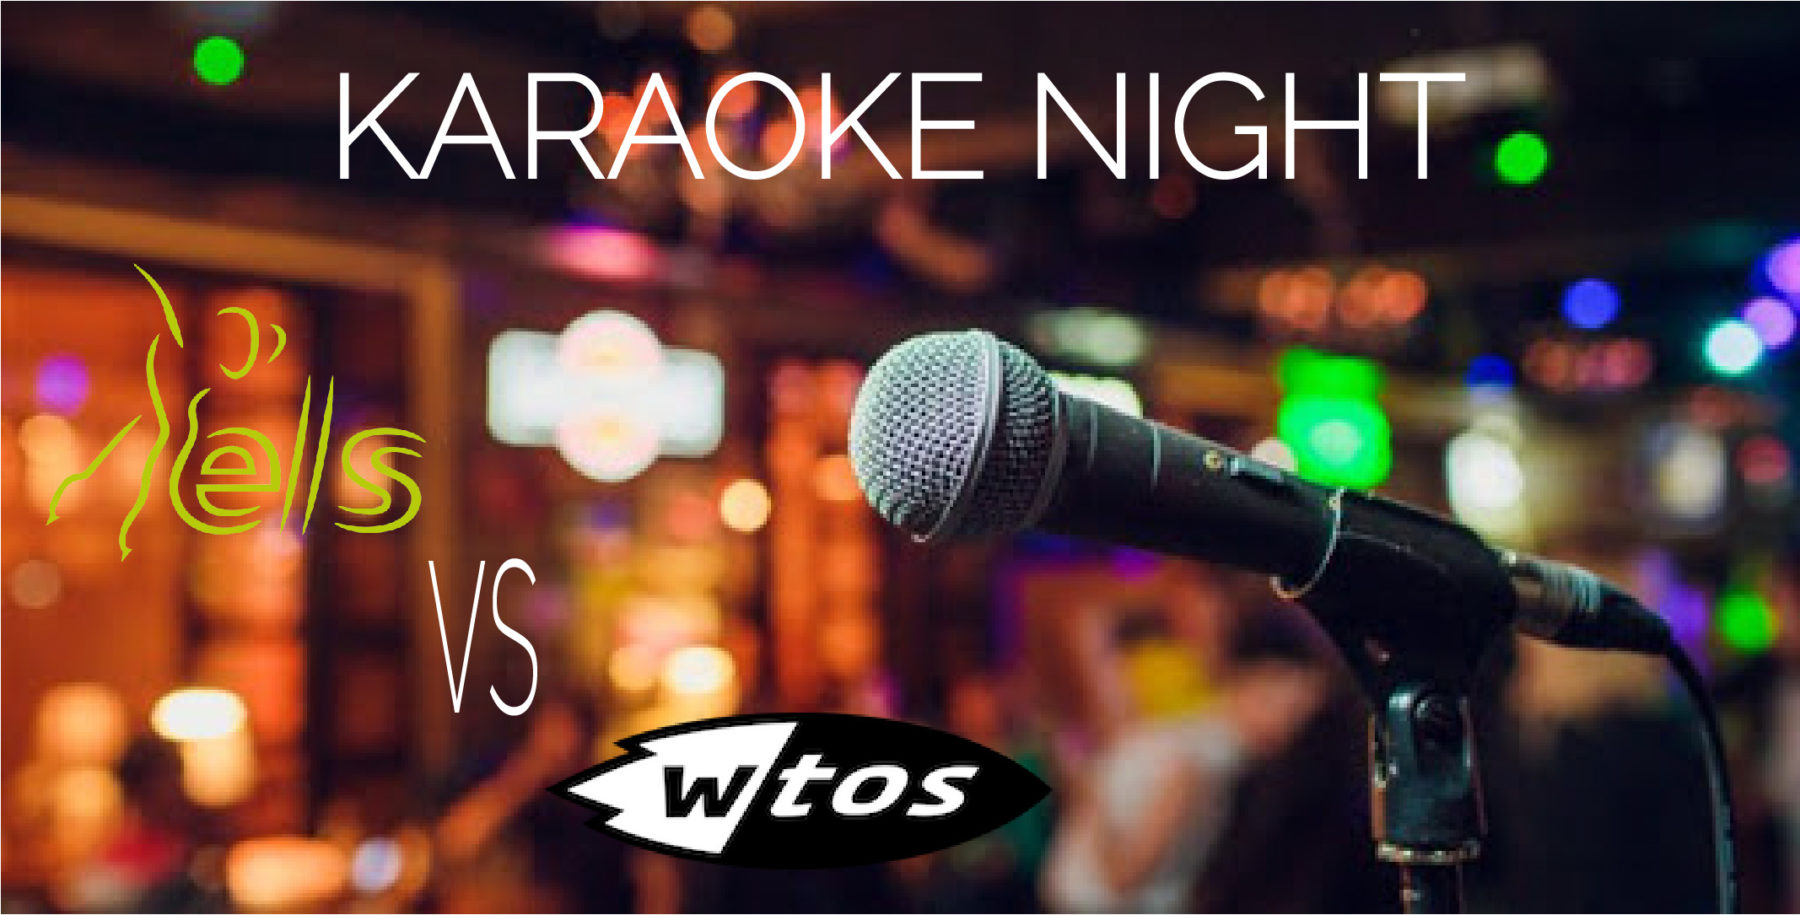 Karaoke avond met WTOS